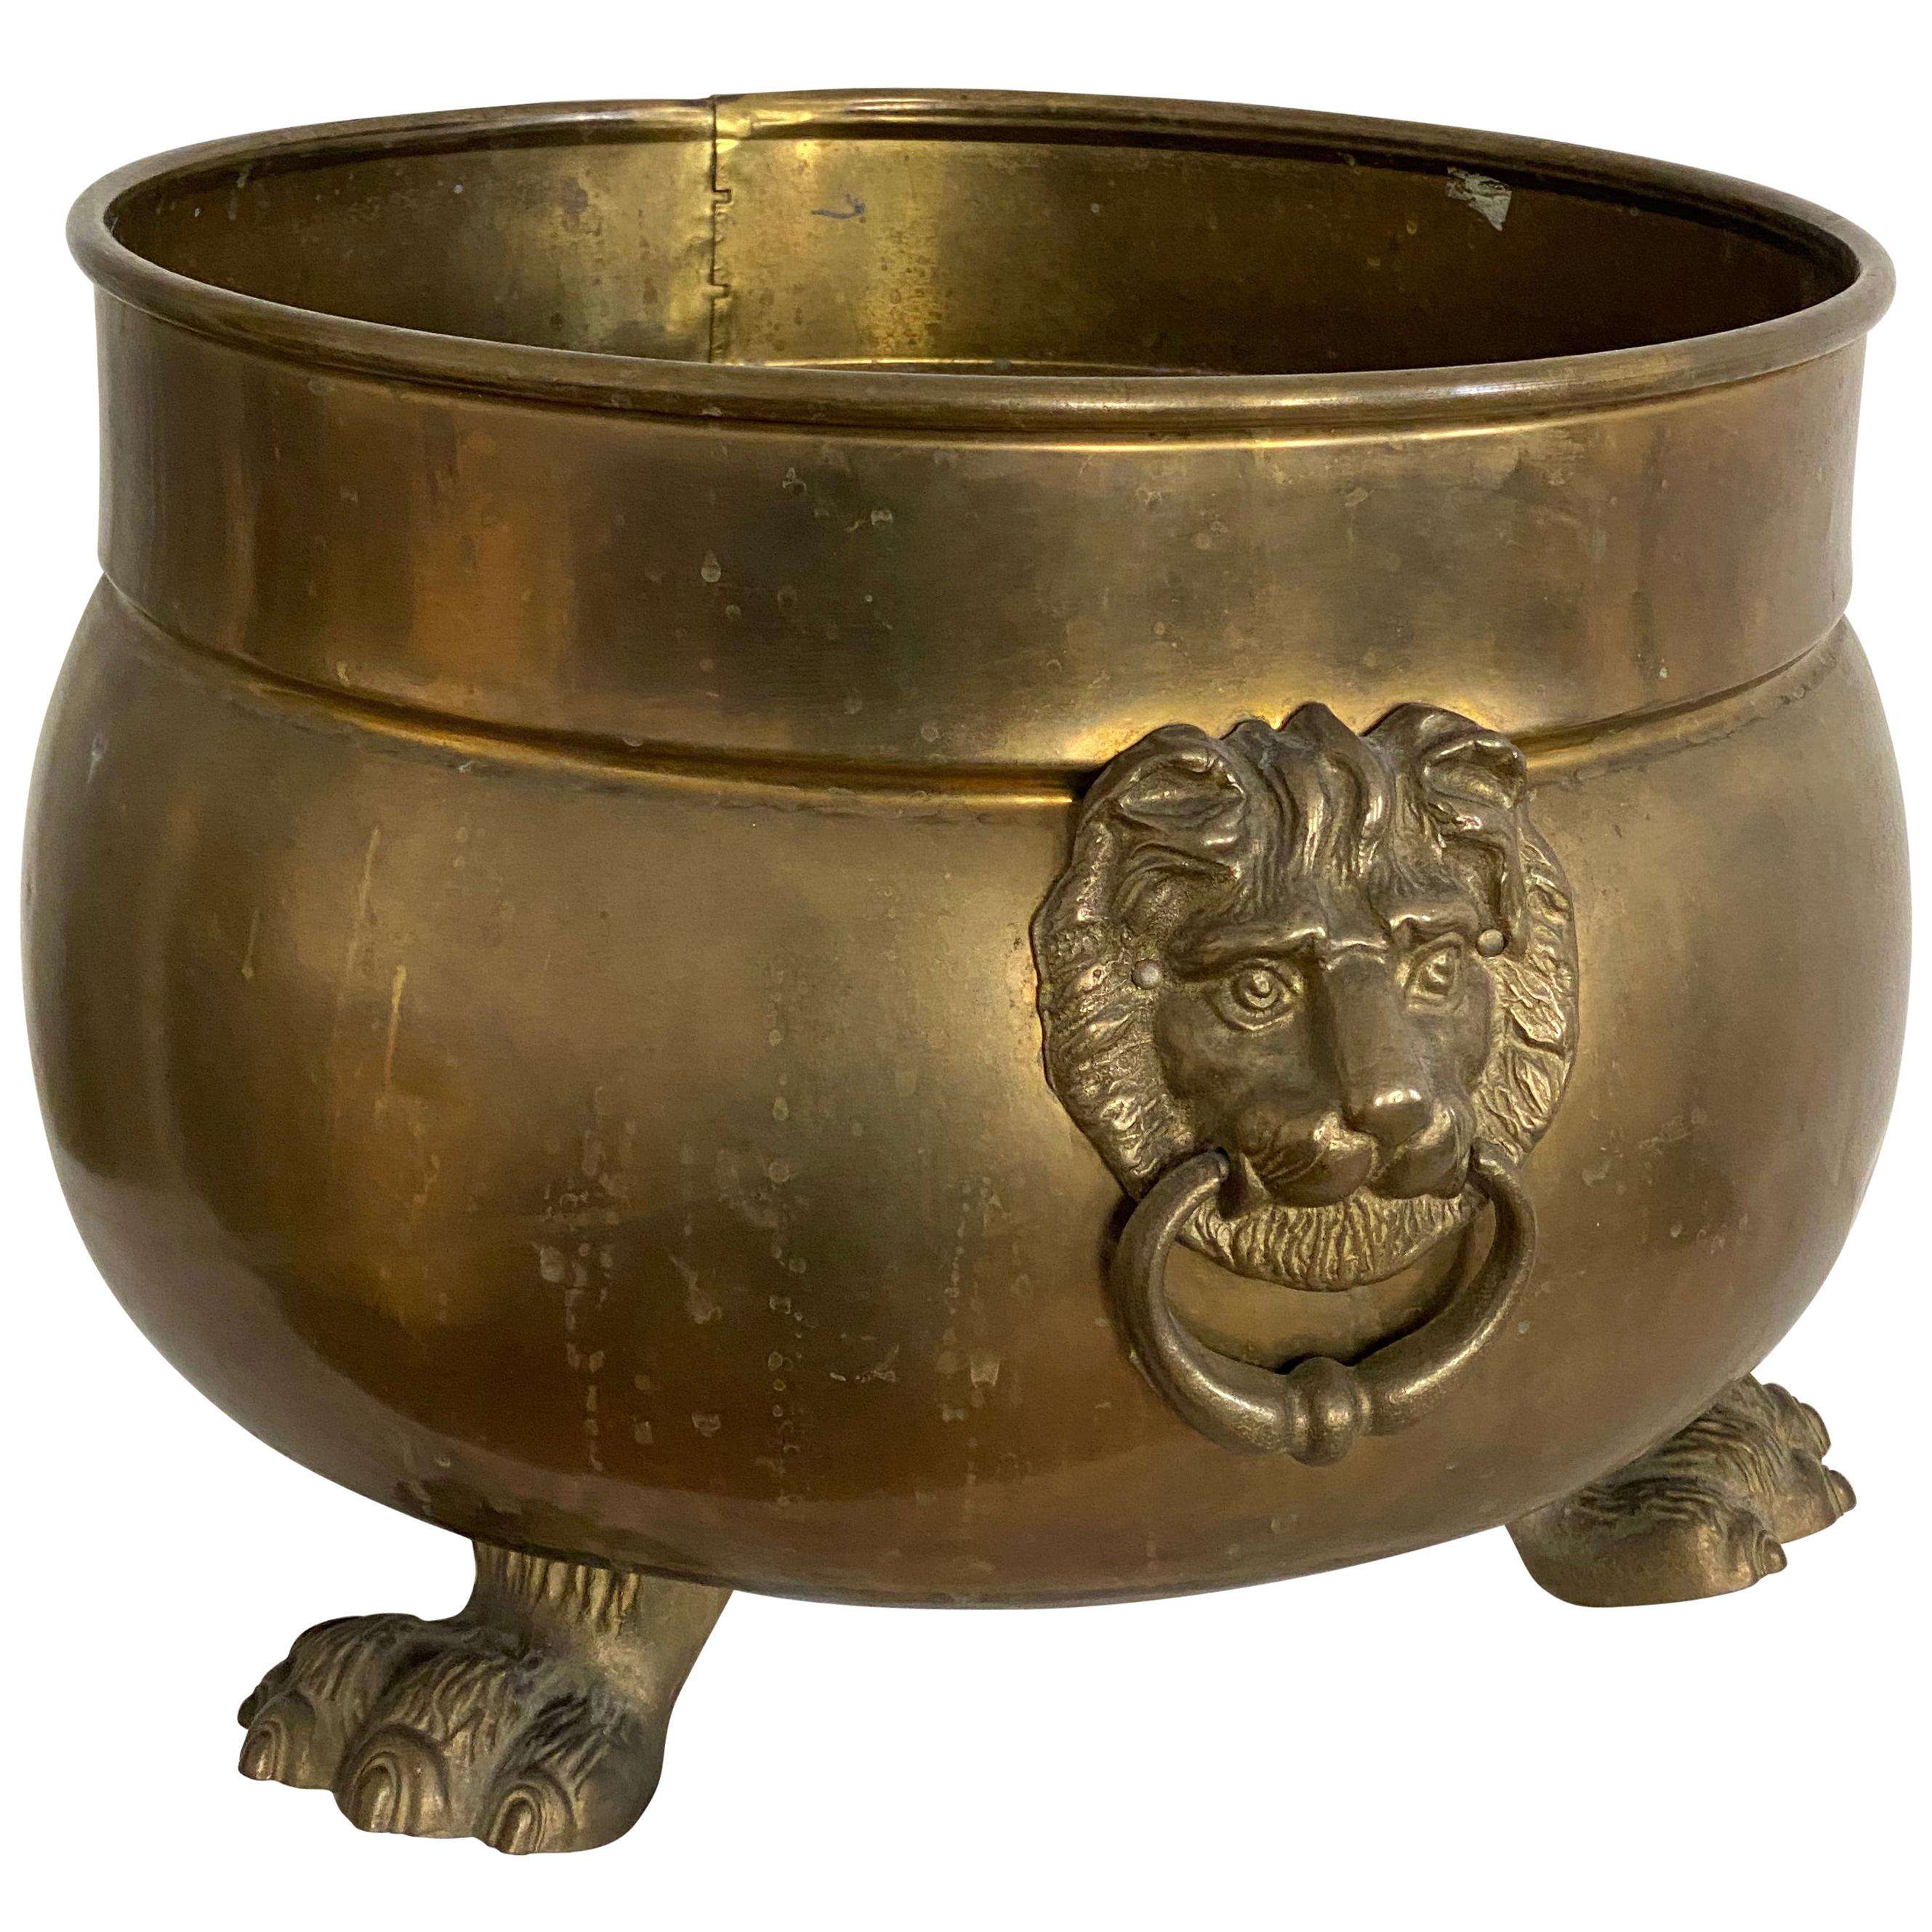 Antique Vienna Brass Rounded Jardinière Plant Pot with Lions Head Handles